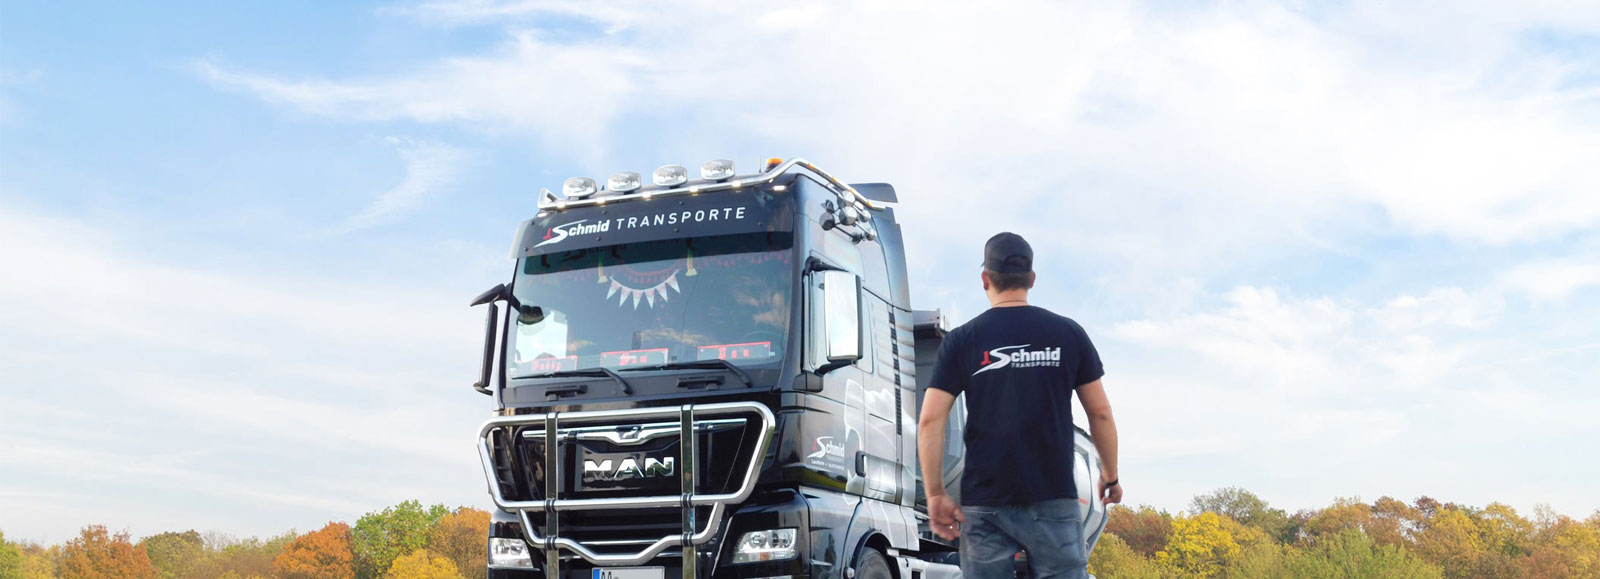 Schmid Transporte Lauchheim Fuhrpark Truck